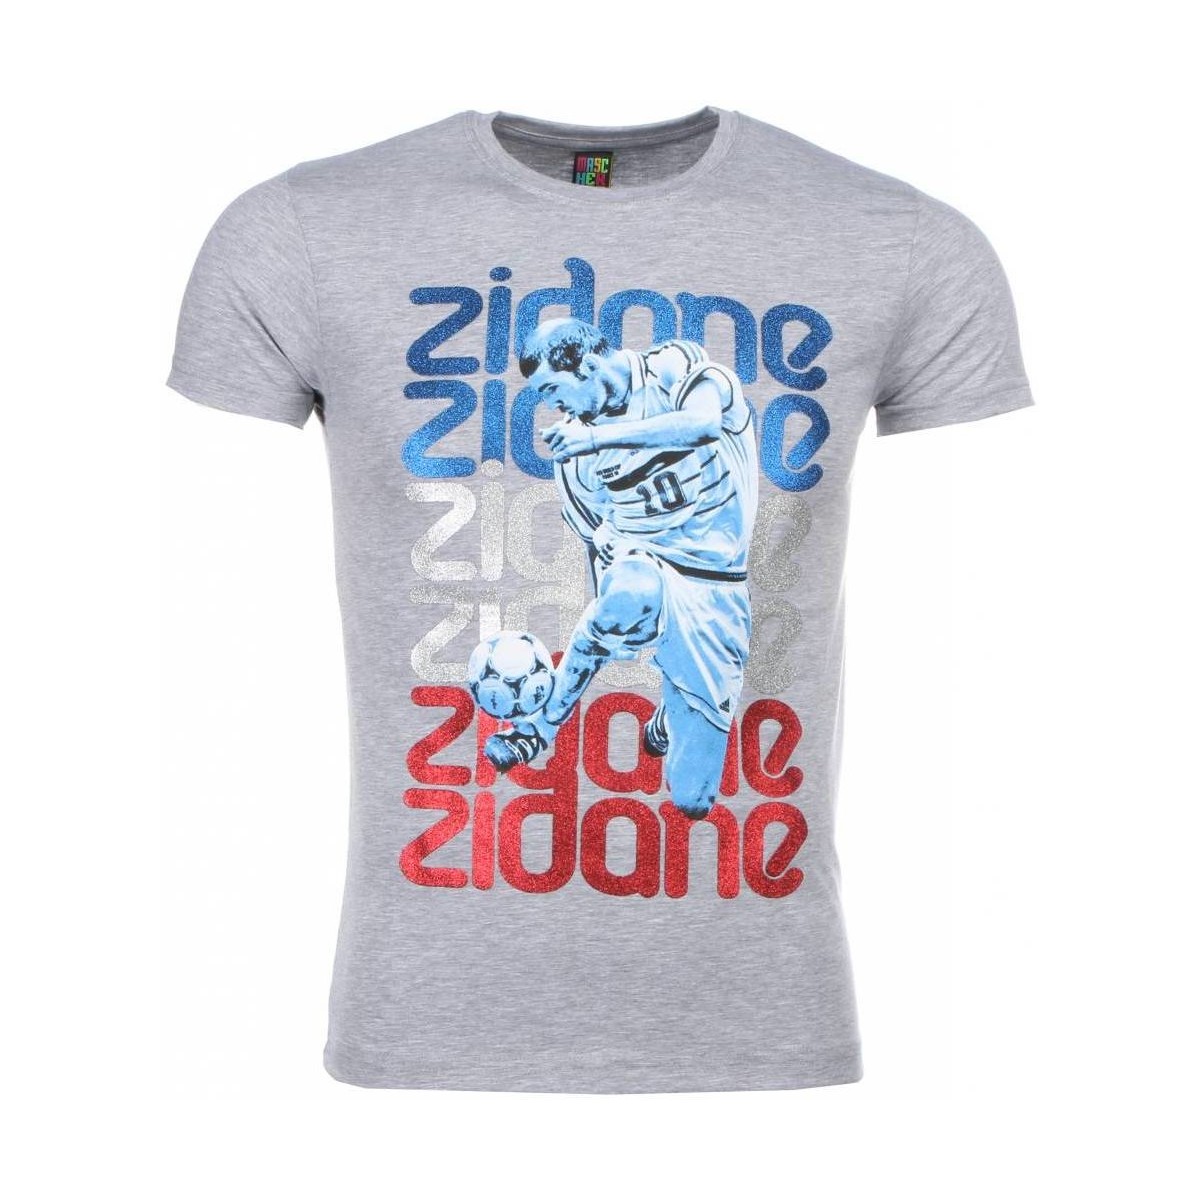 textil Herr T-shirts Local Fanatic Zidane Print Grå